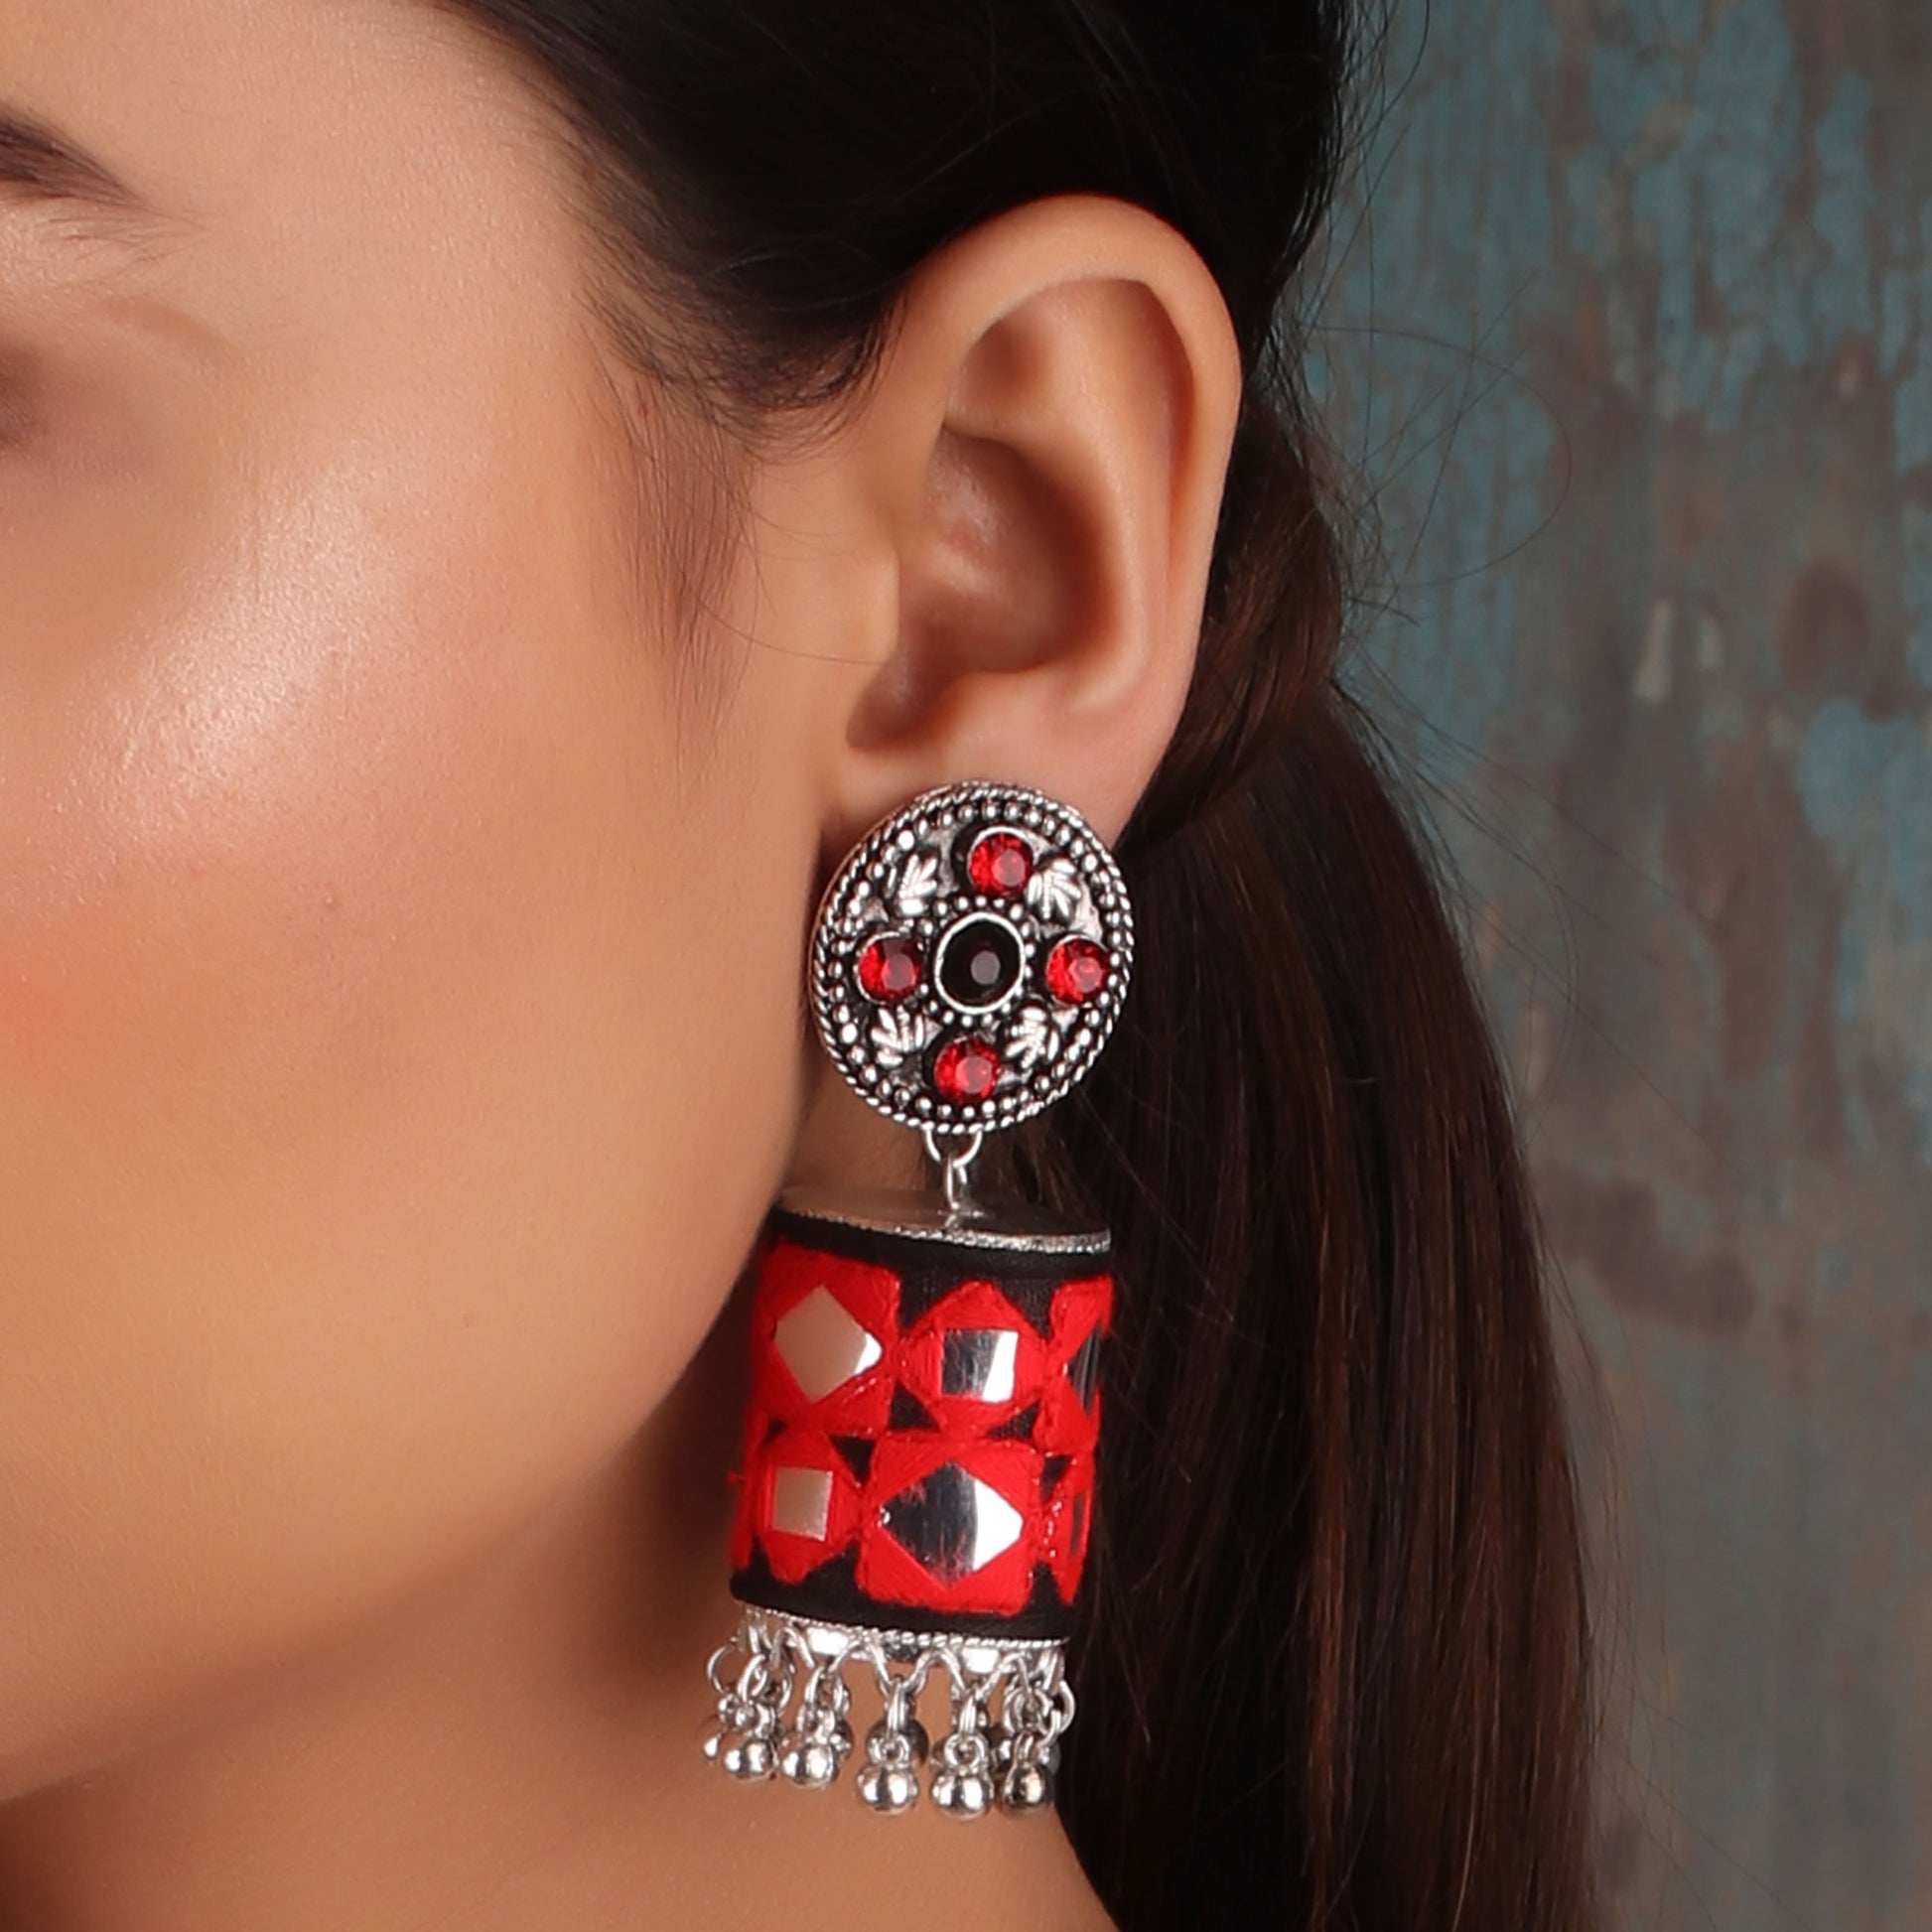 Earrings,The Artwork Earring in Red & Black - Cippele Multi Store